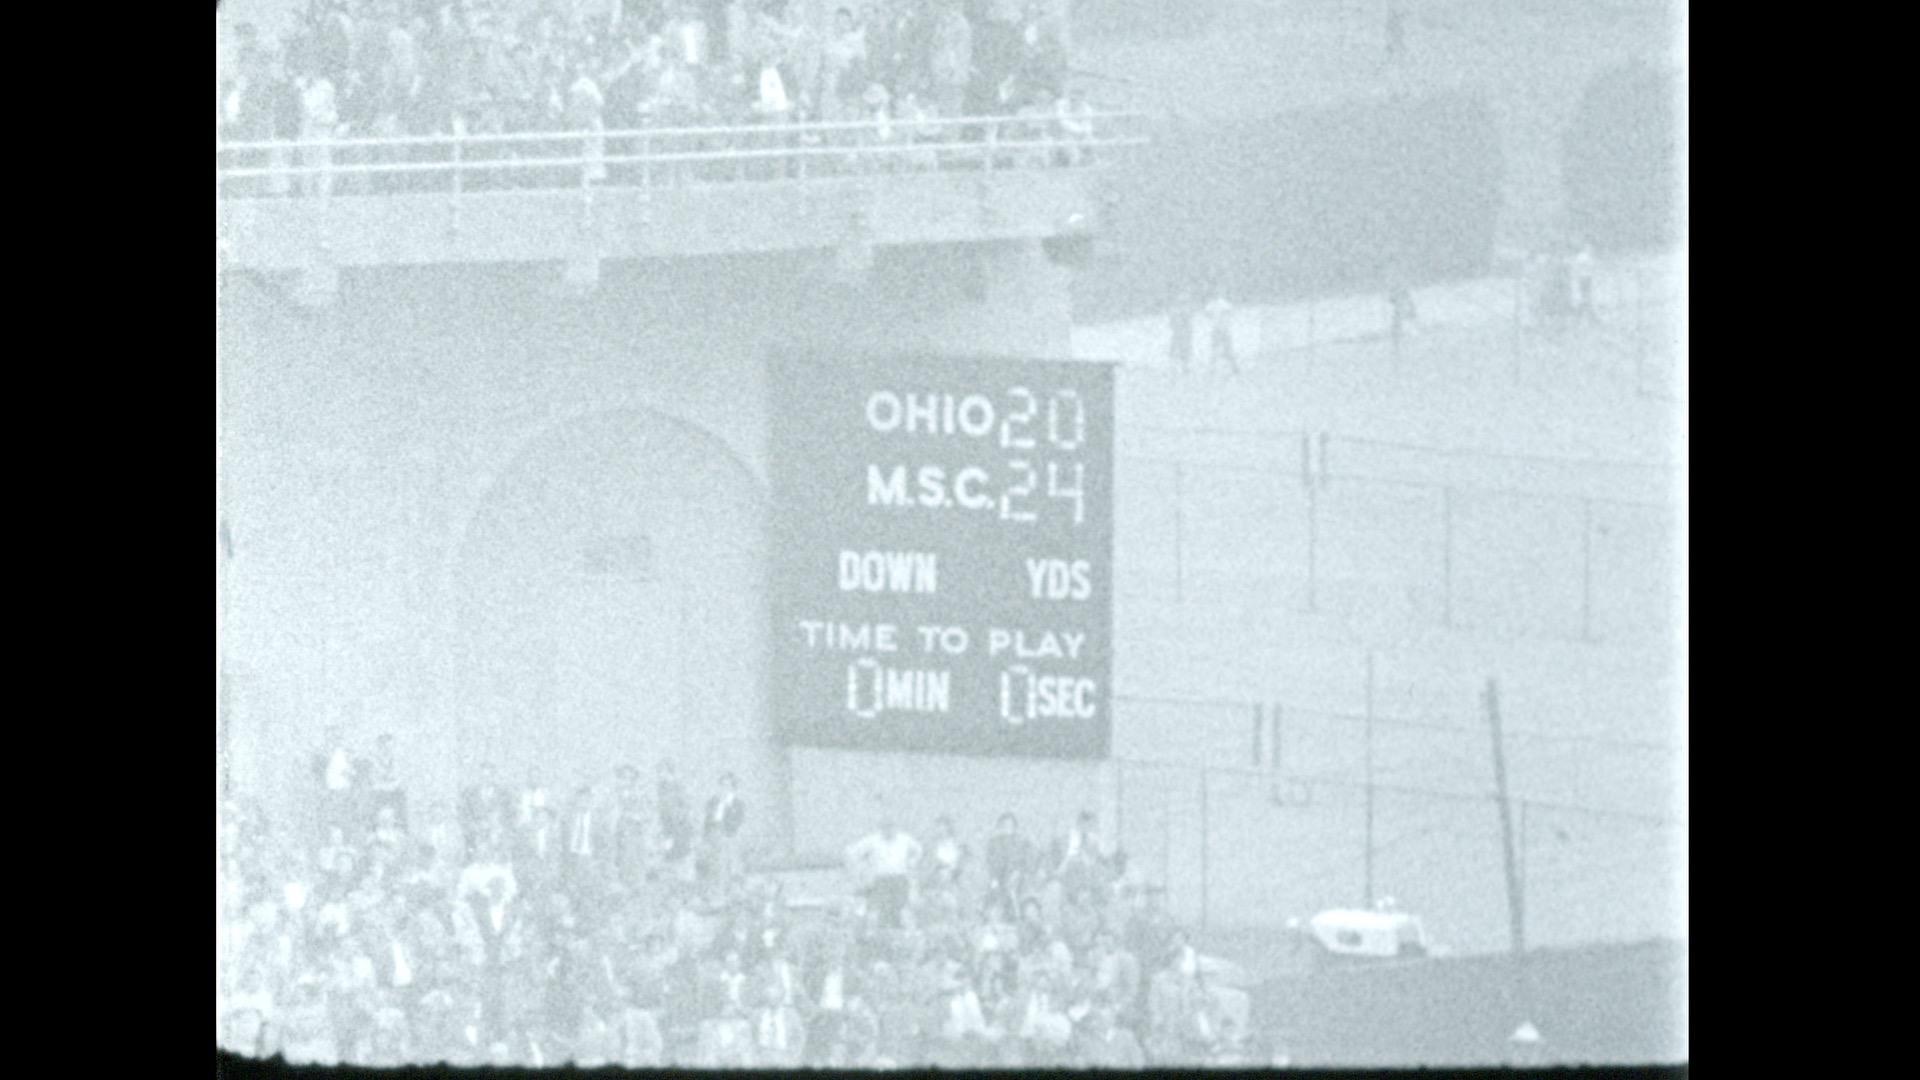 MSC Football vs. Ohio State (4th quarter), 1951